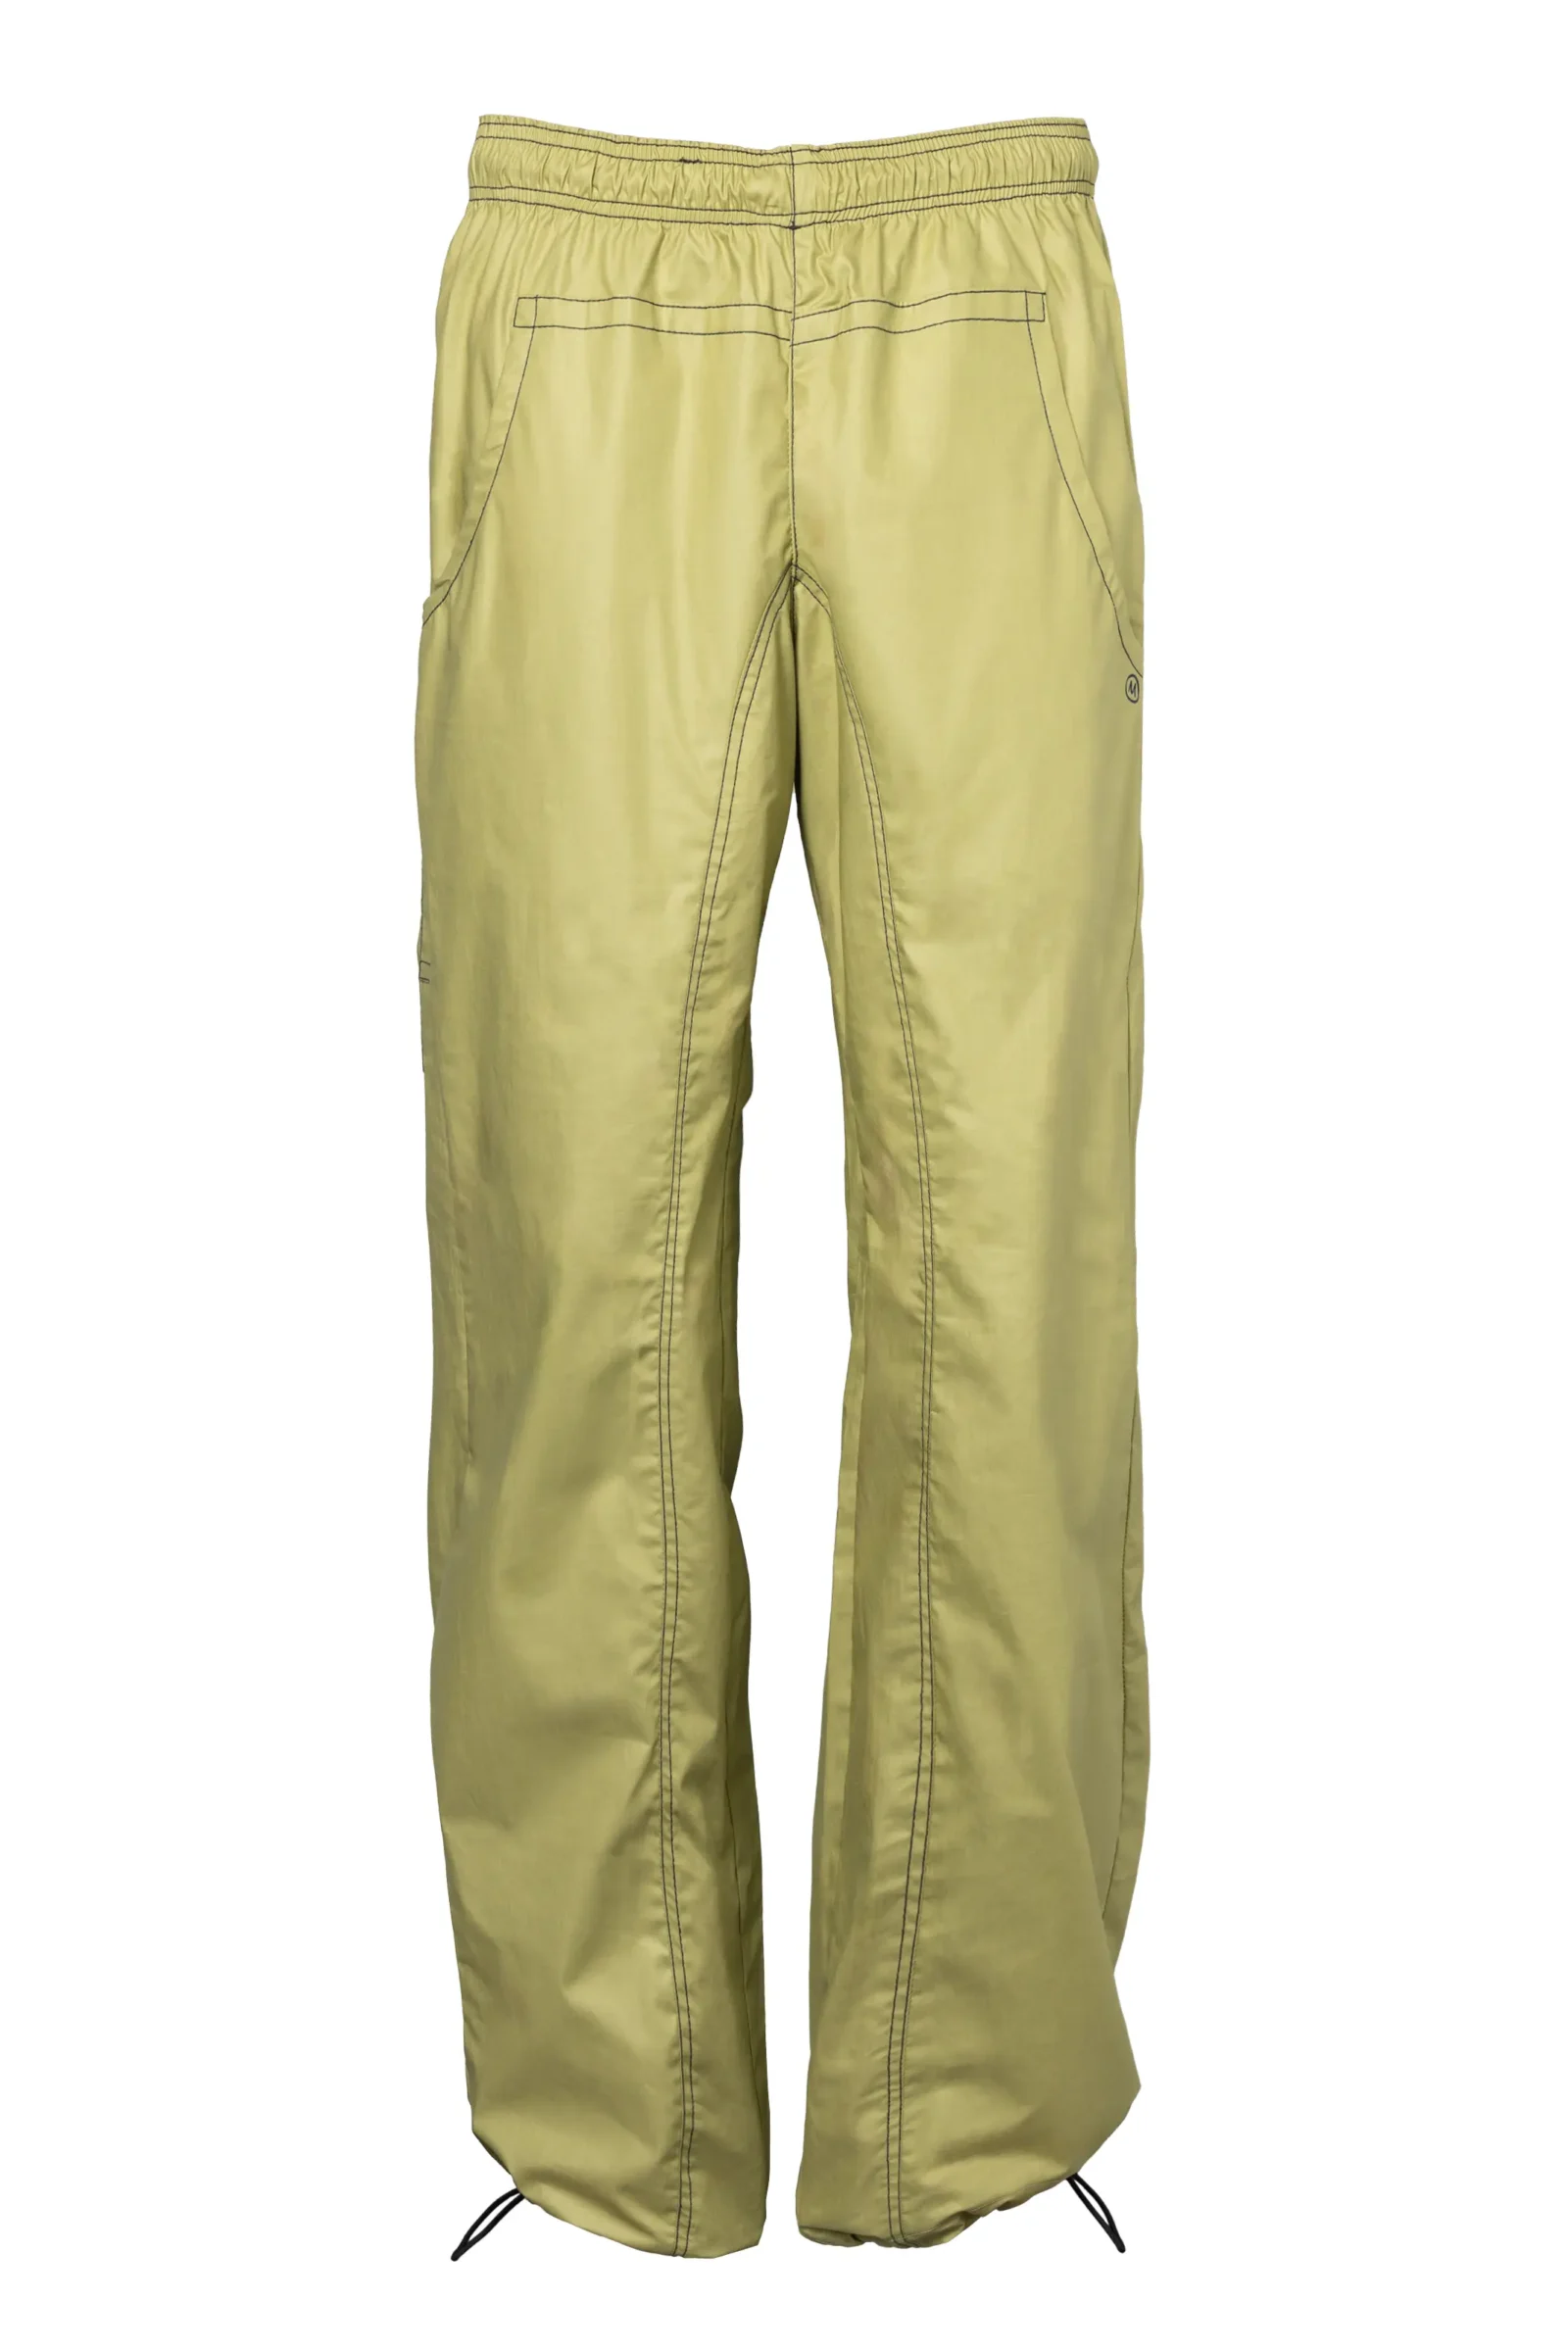 Pantalon imperméable homme - vert sauge - JIMMY MONVIC